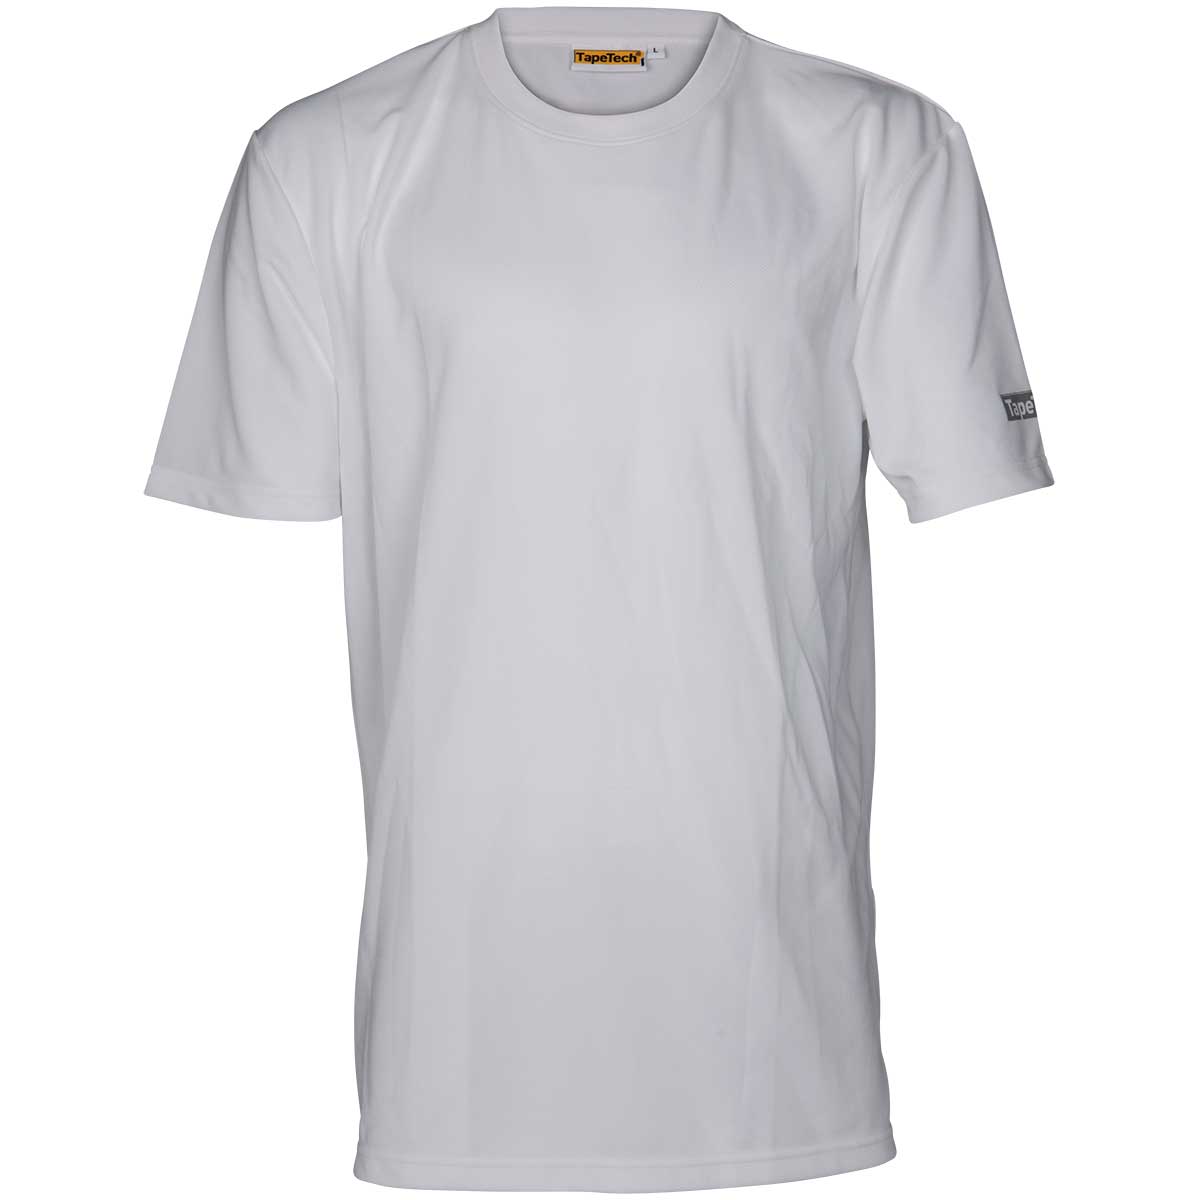 TapeTech Premium Work Shirt - XLarge